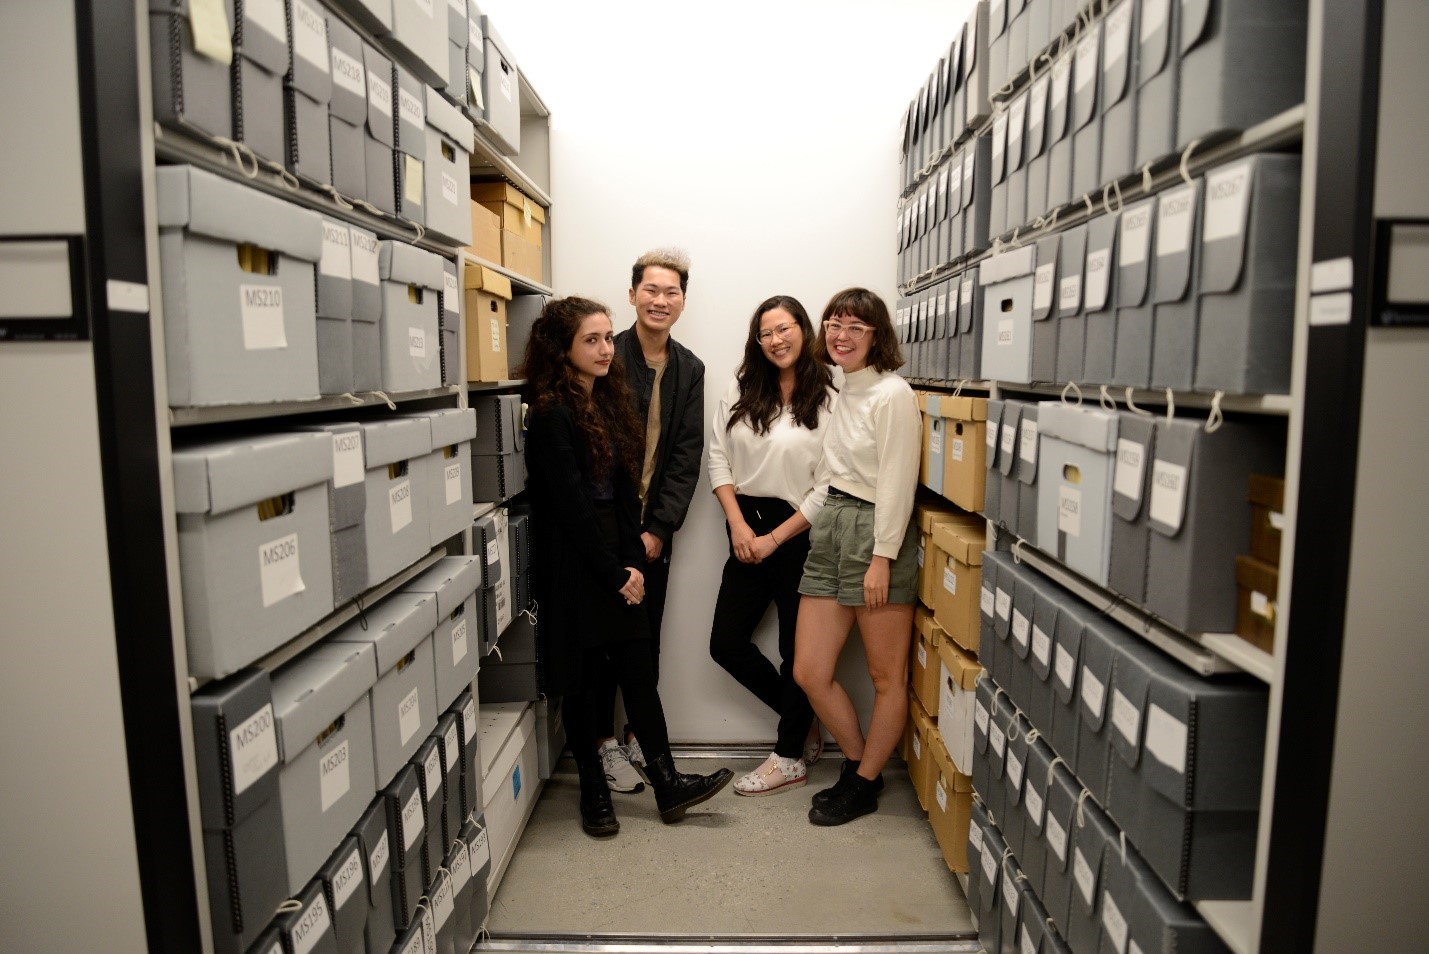 Rita, Aaron Tong, Lisa Uyeda and Reiko Pleau between the moving shelves housing manuscripts inside the vault.